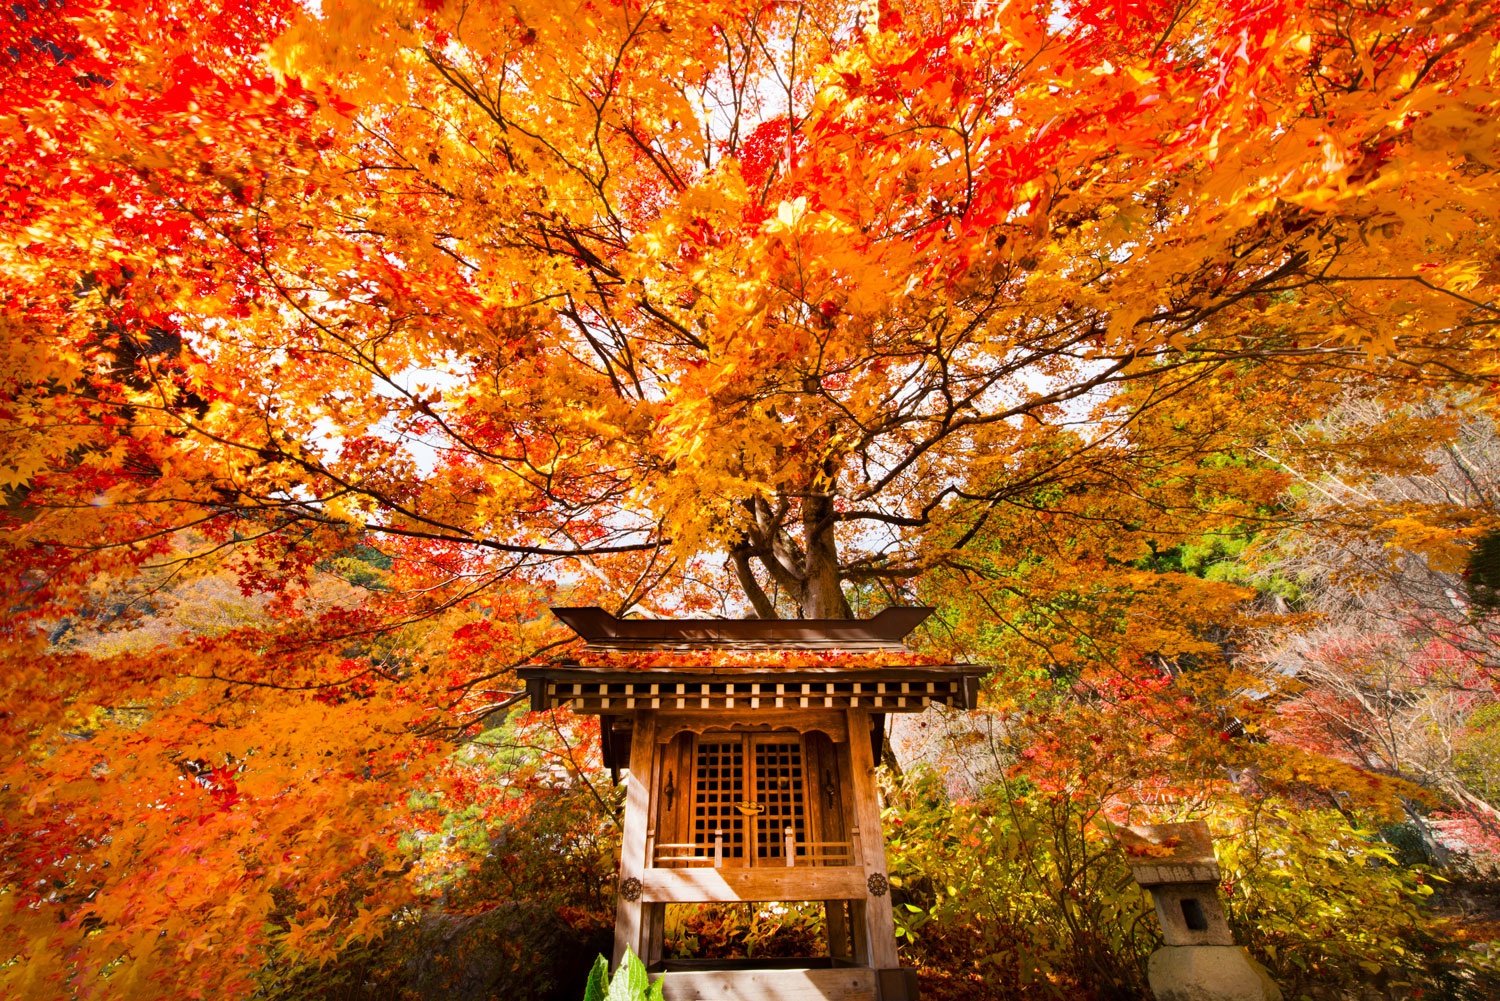 autumn-leaves-viewing-japan-photo-tour-blain-harasymiw-photography